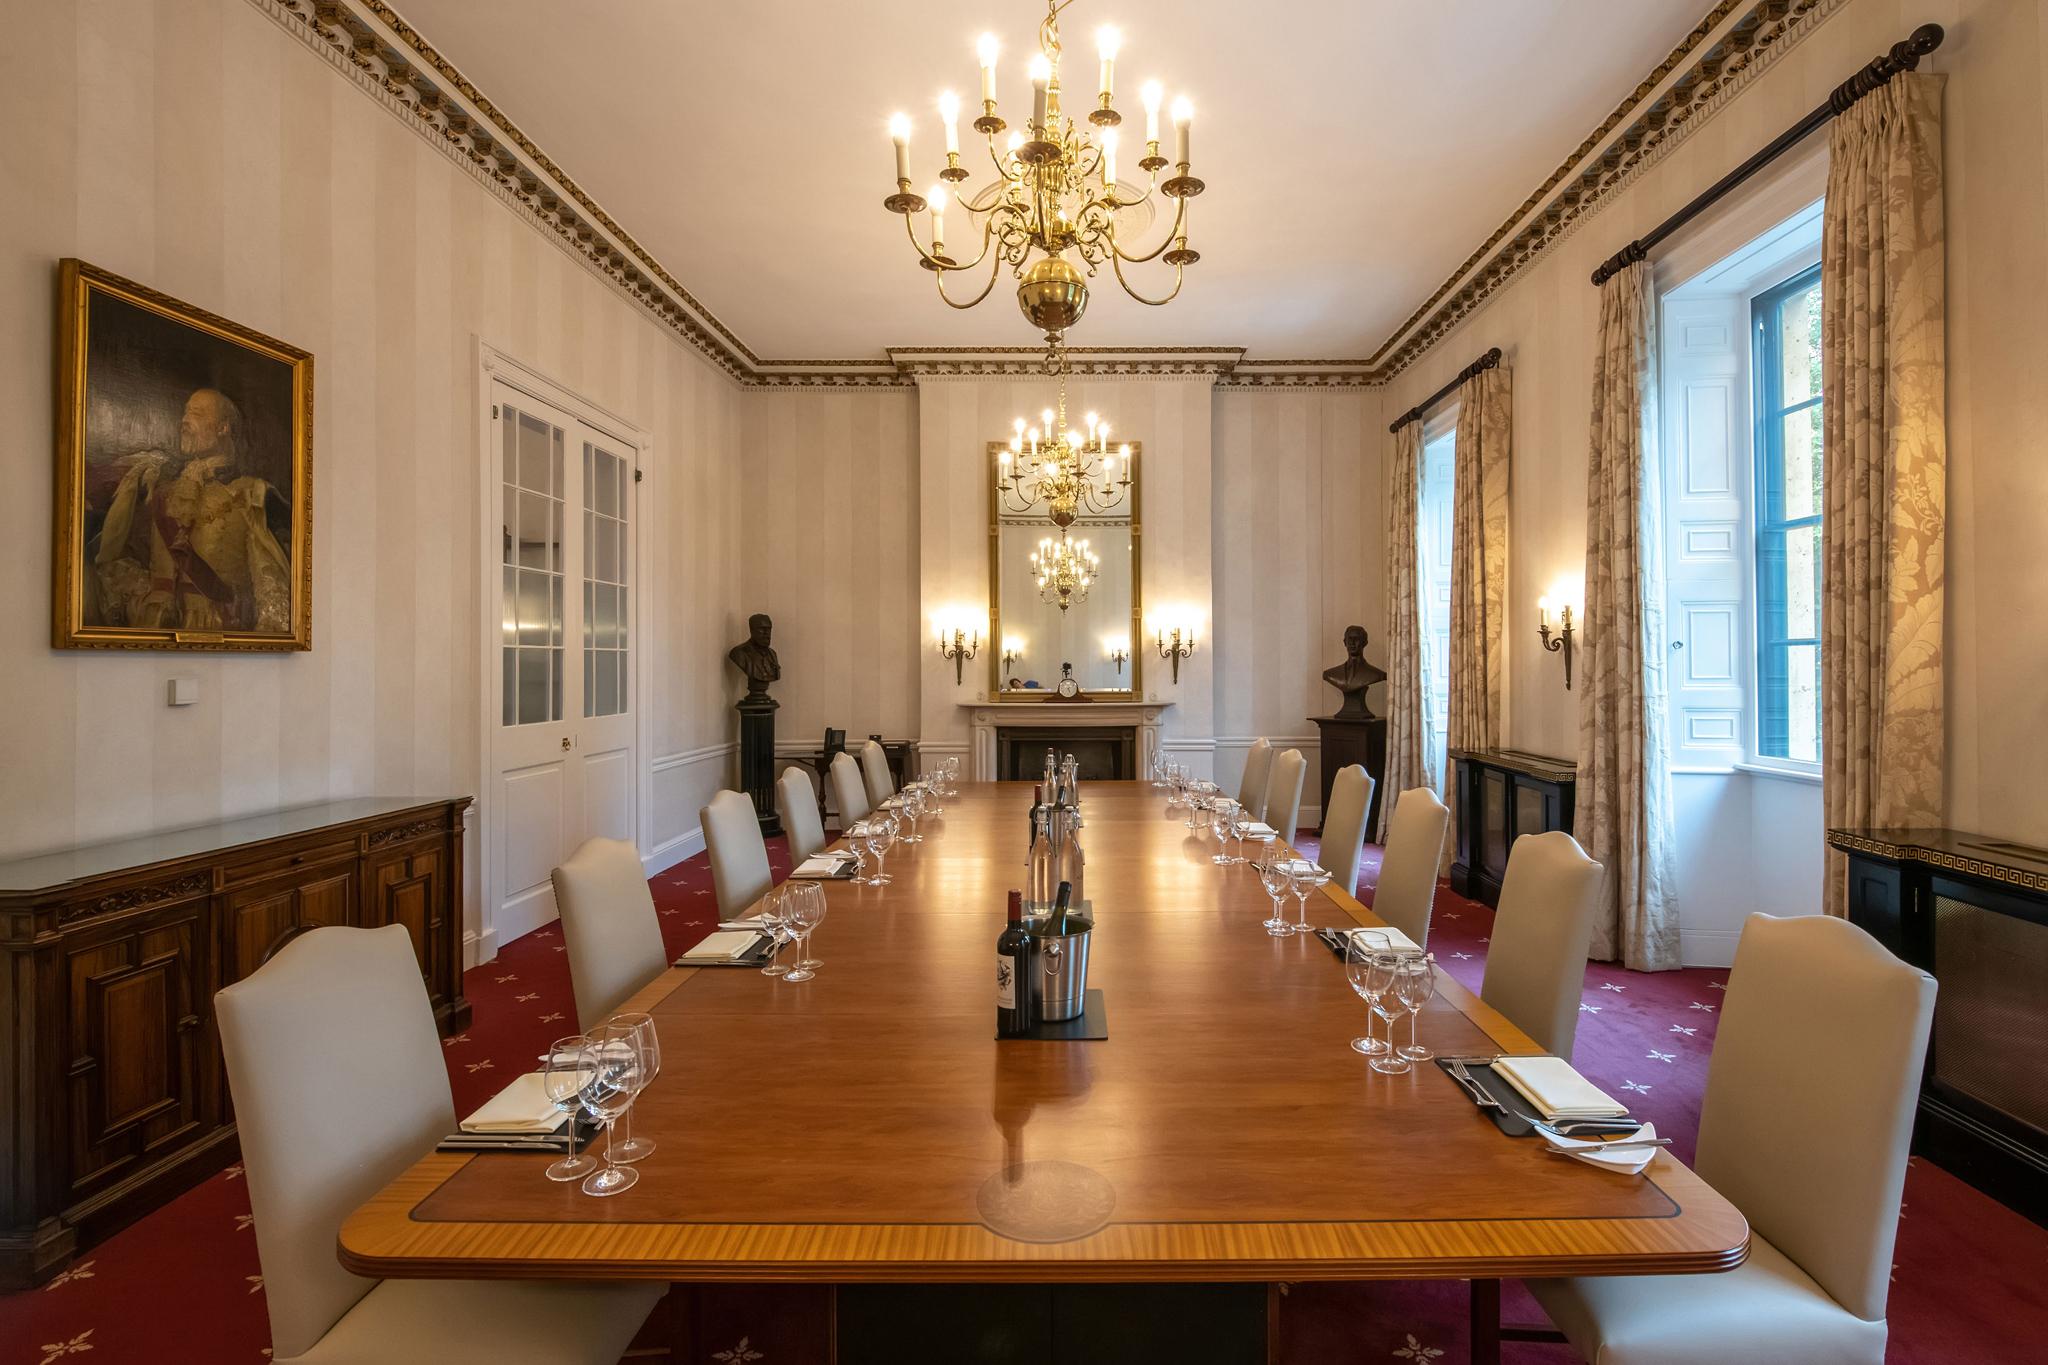 Presidents Room, No.11 Cavendish Square photo #1